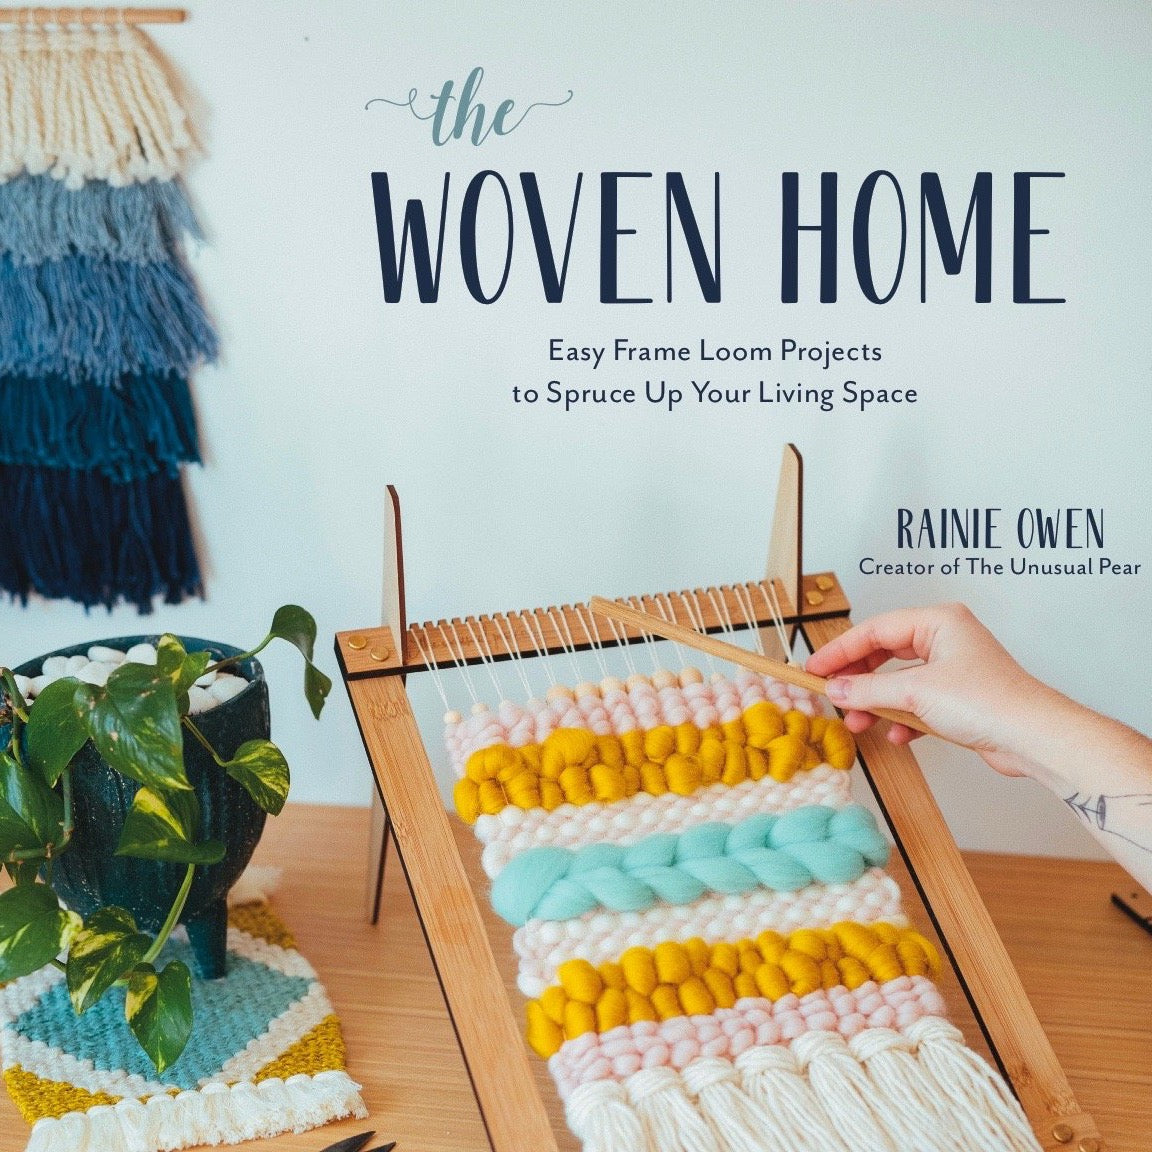 The Woven Home by Rainie Owen - The Unusual Pear